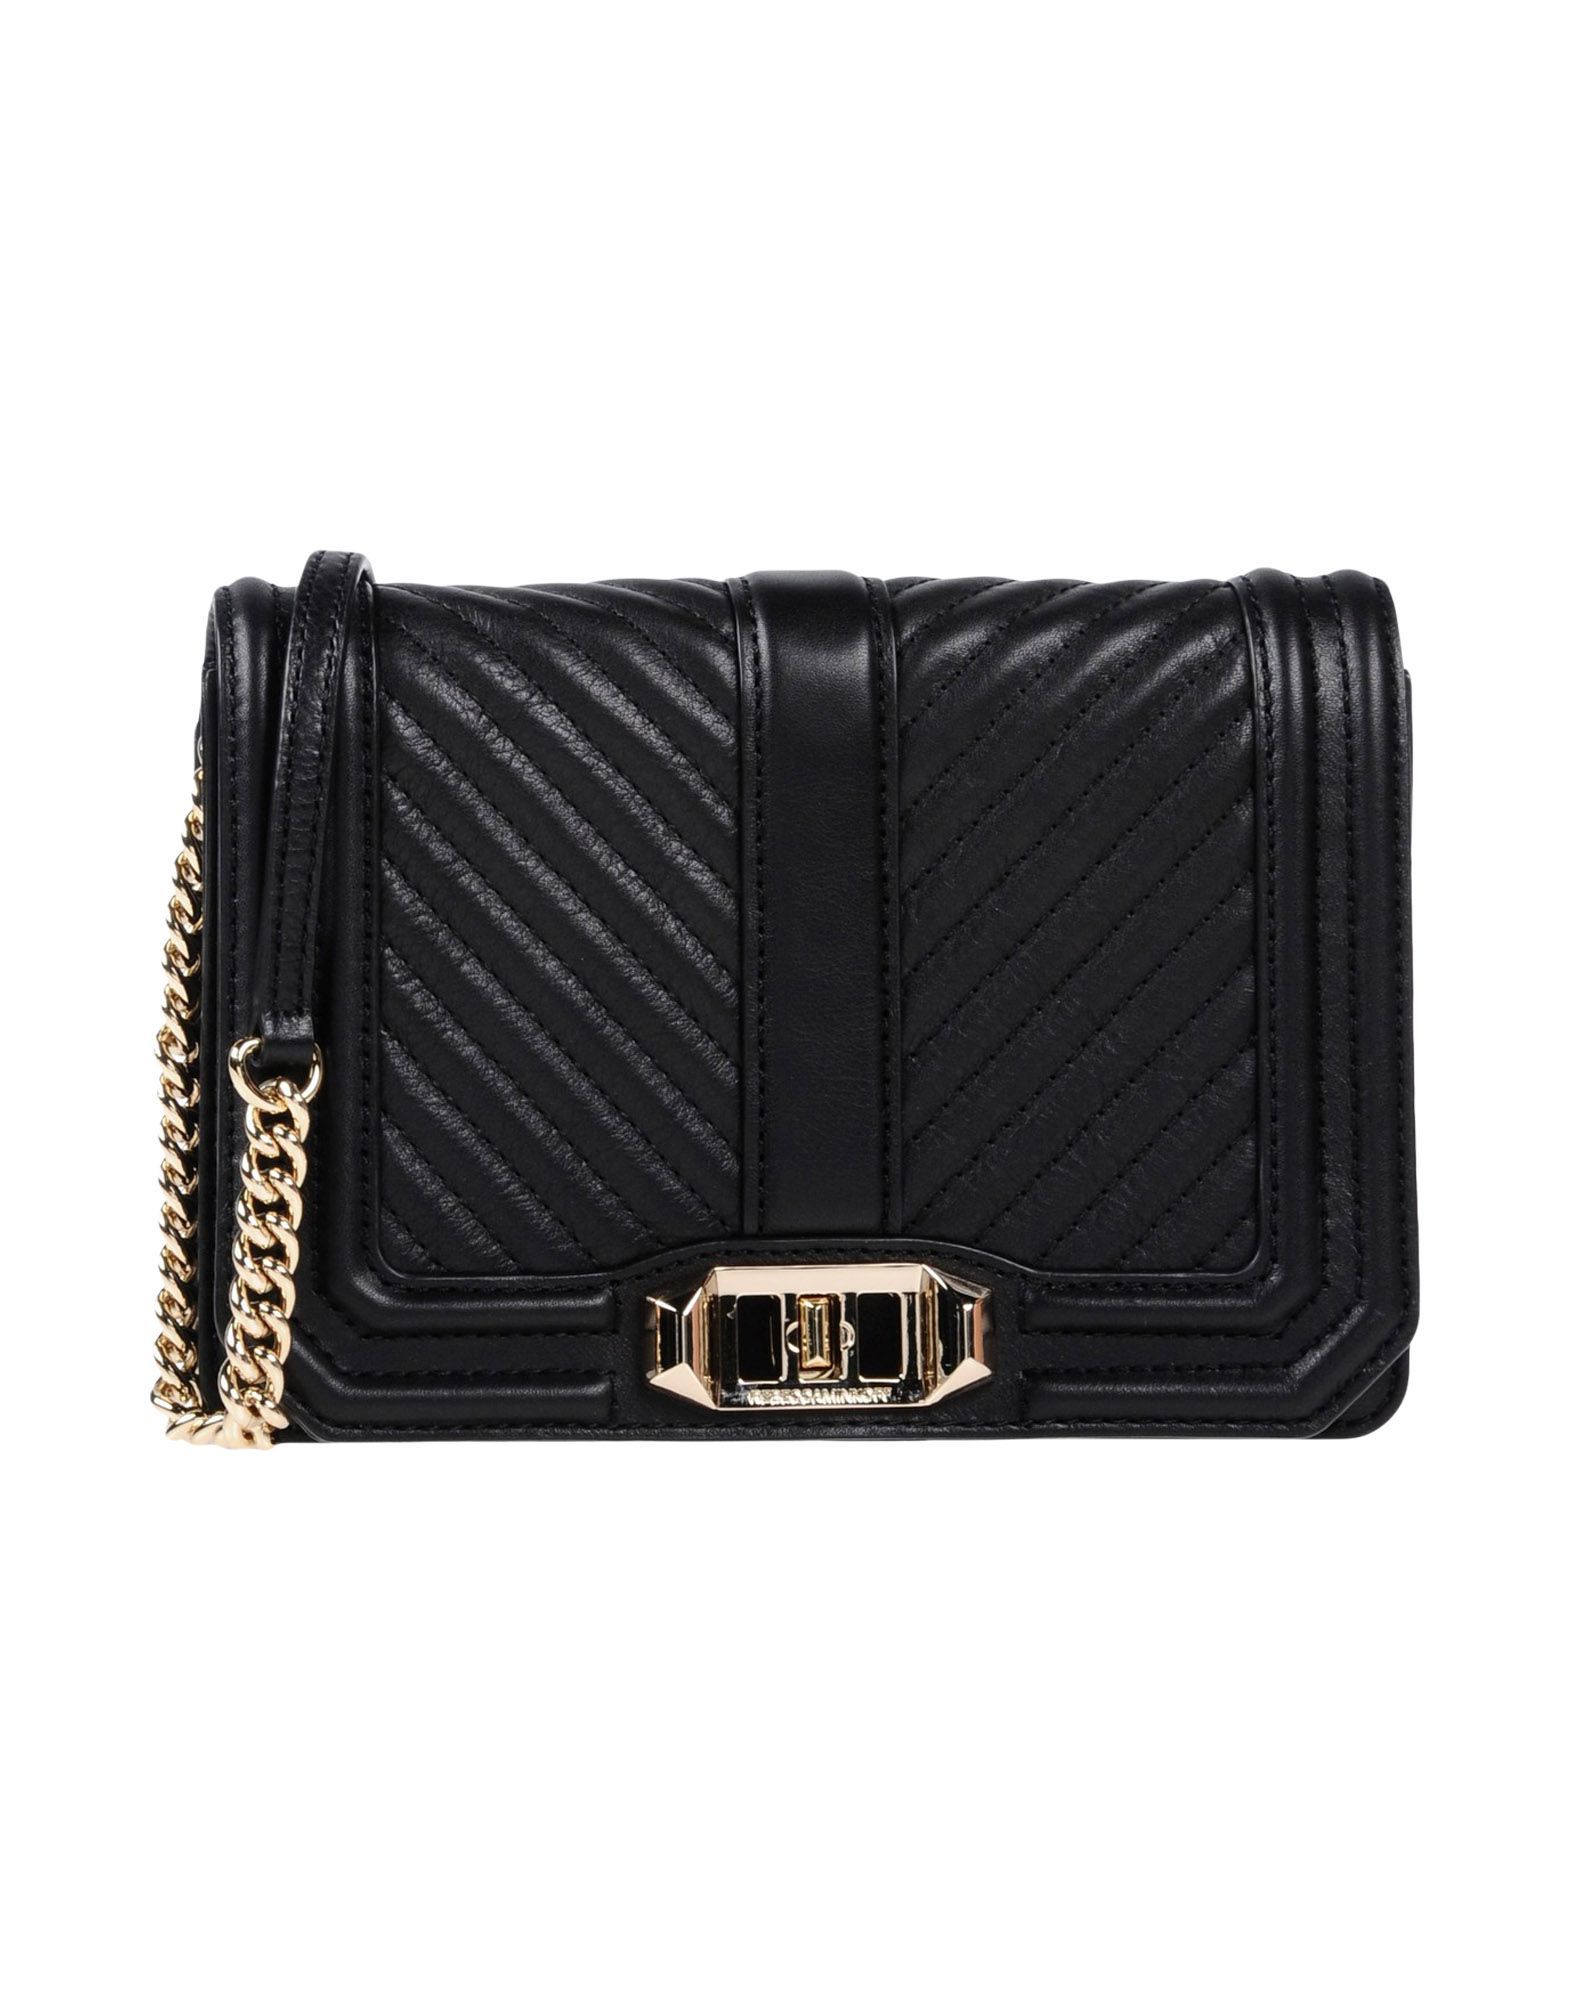 REBECCA MINKOFF Handbags | YOOX (US)